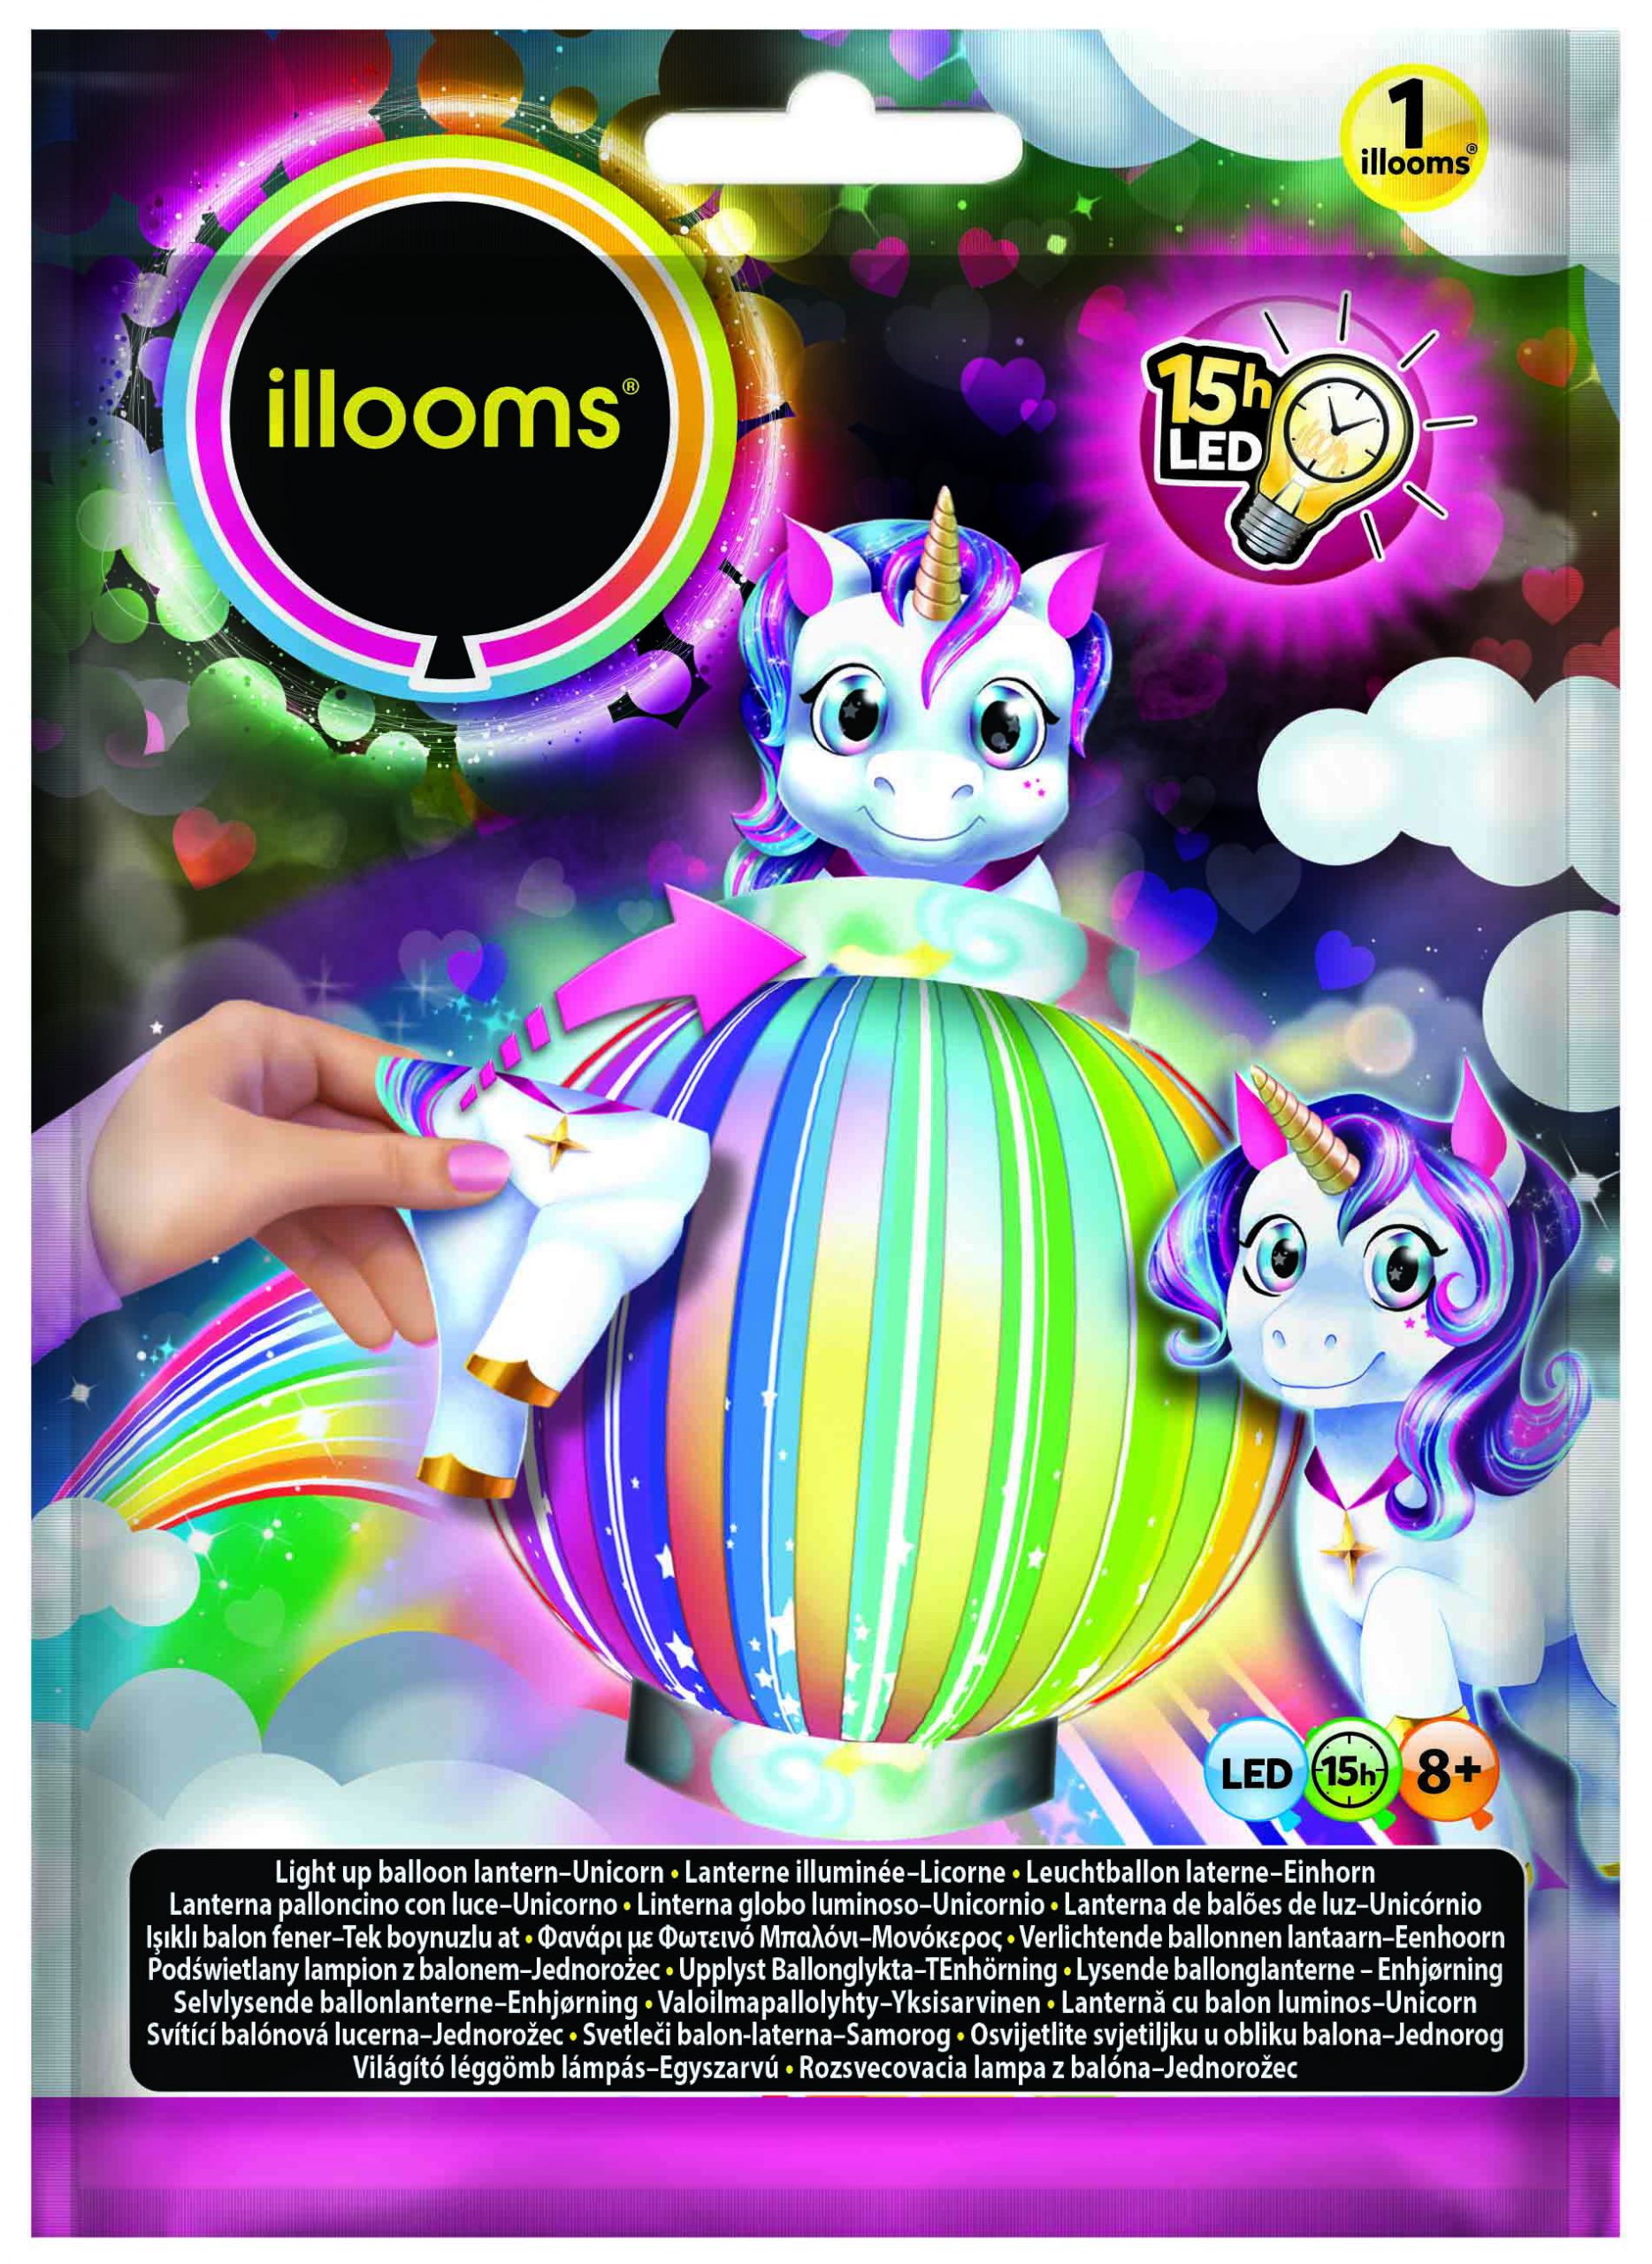 Balloons LED Illoom MYO Unicorn Lantern (FS)